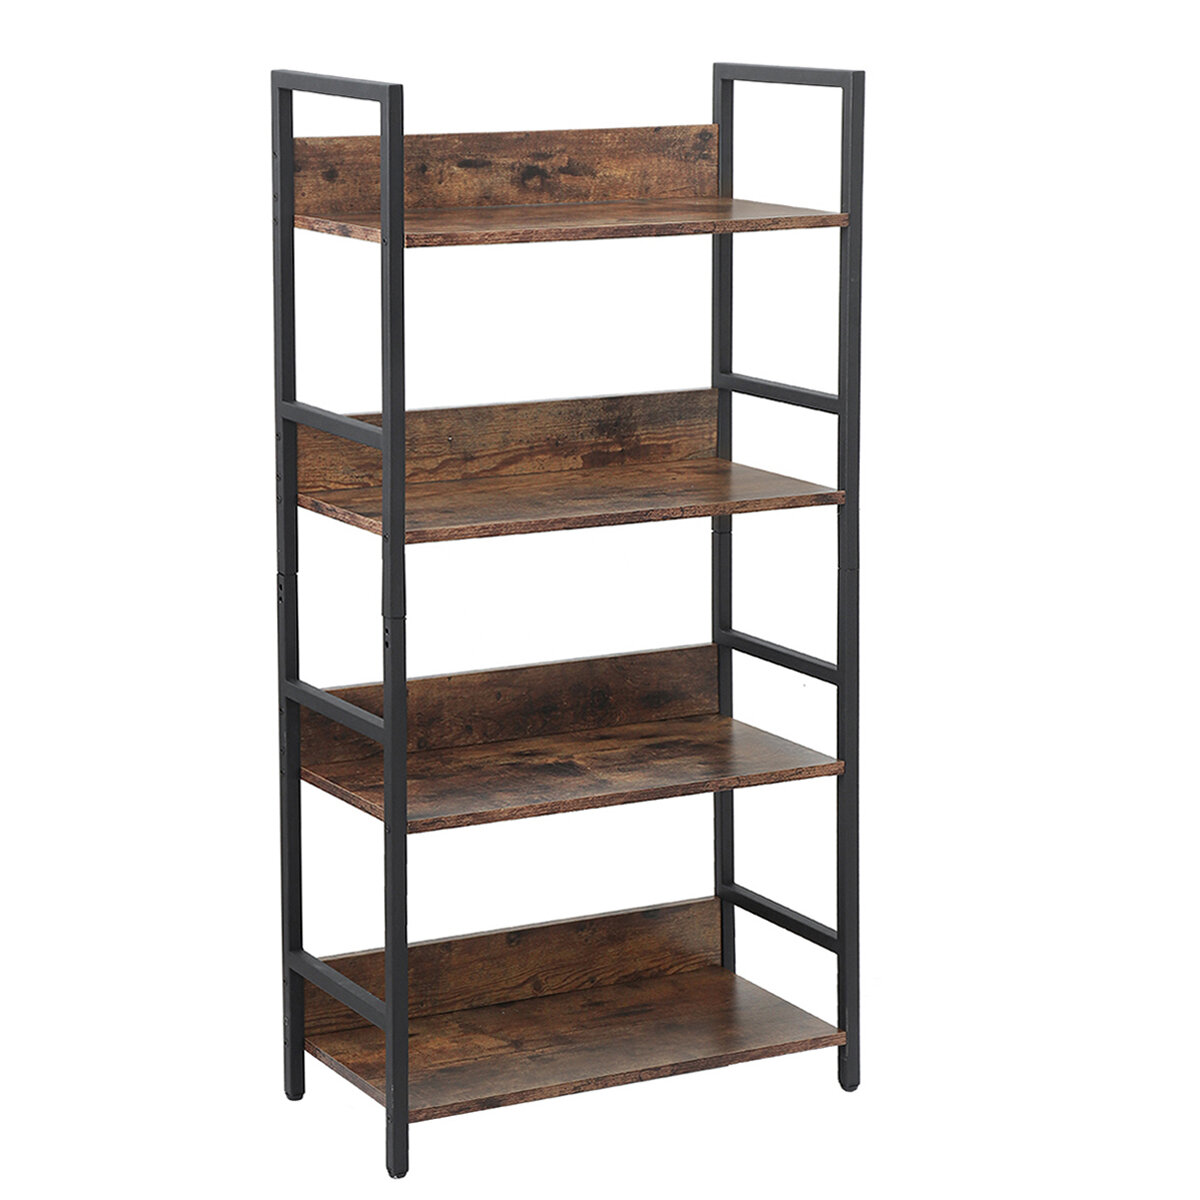 

Industrial Ladder Shelf 4 Tiers Bookshelf Plant Flower Stand Storage Rack Multipurpose Organizer Shelves Metal Frame for